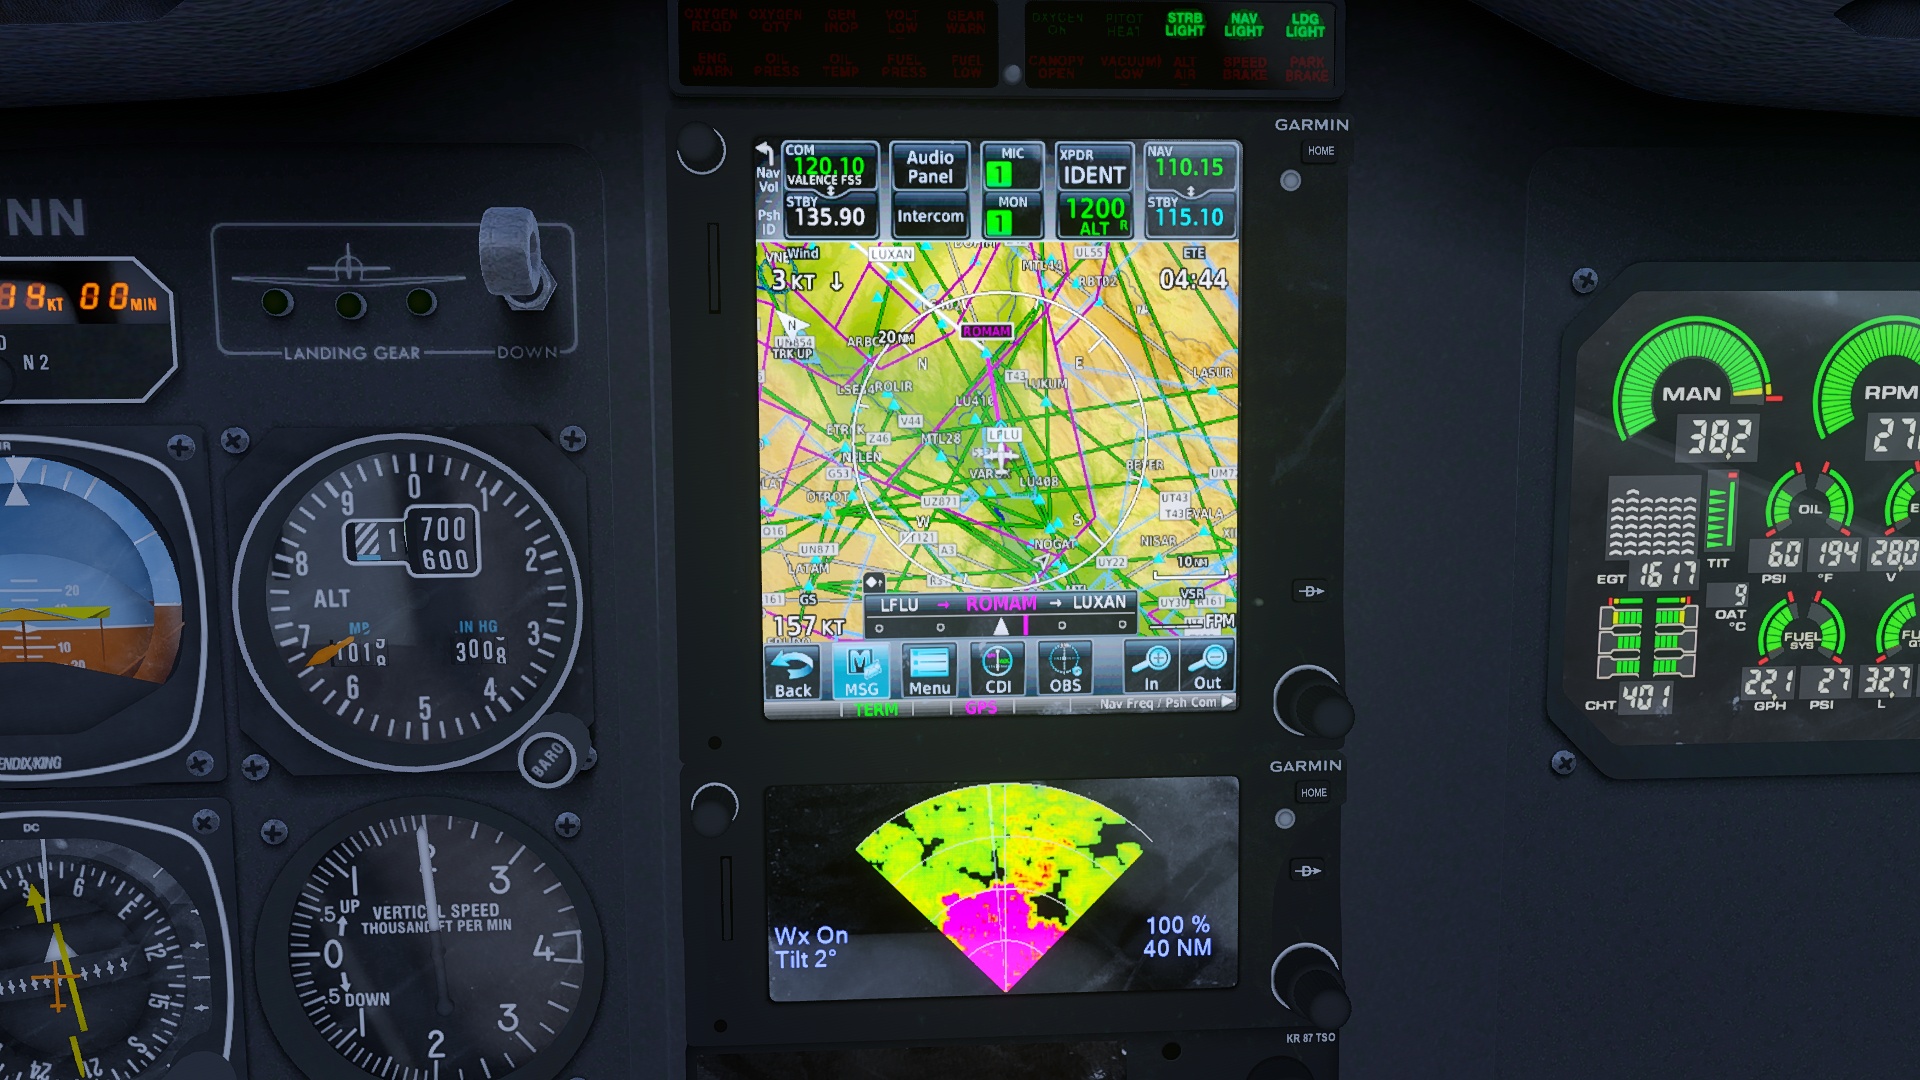 Puce GPS valise - Forum Avion - Forums